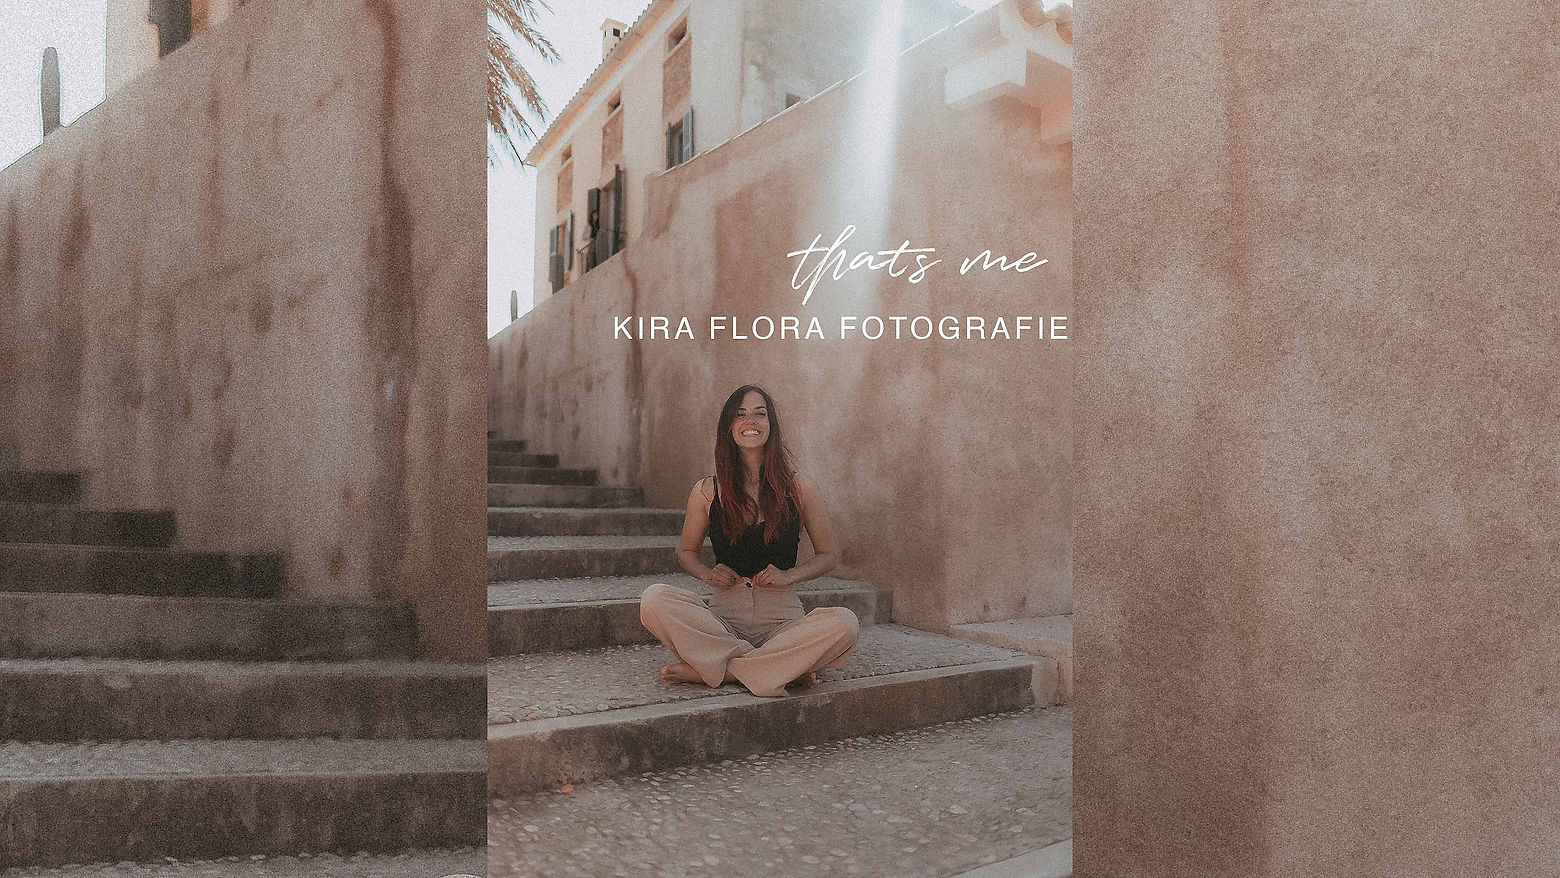 Kira Flora Fotografie - That's me!